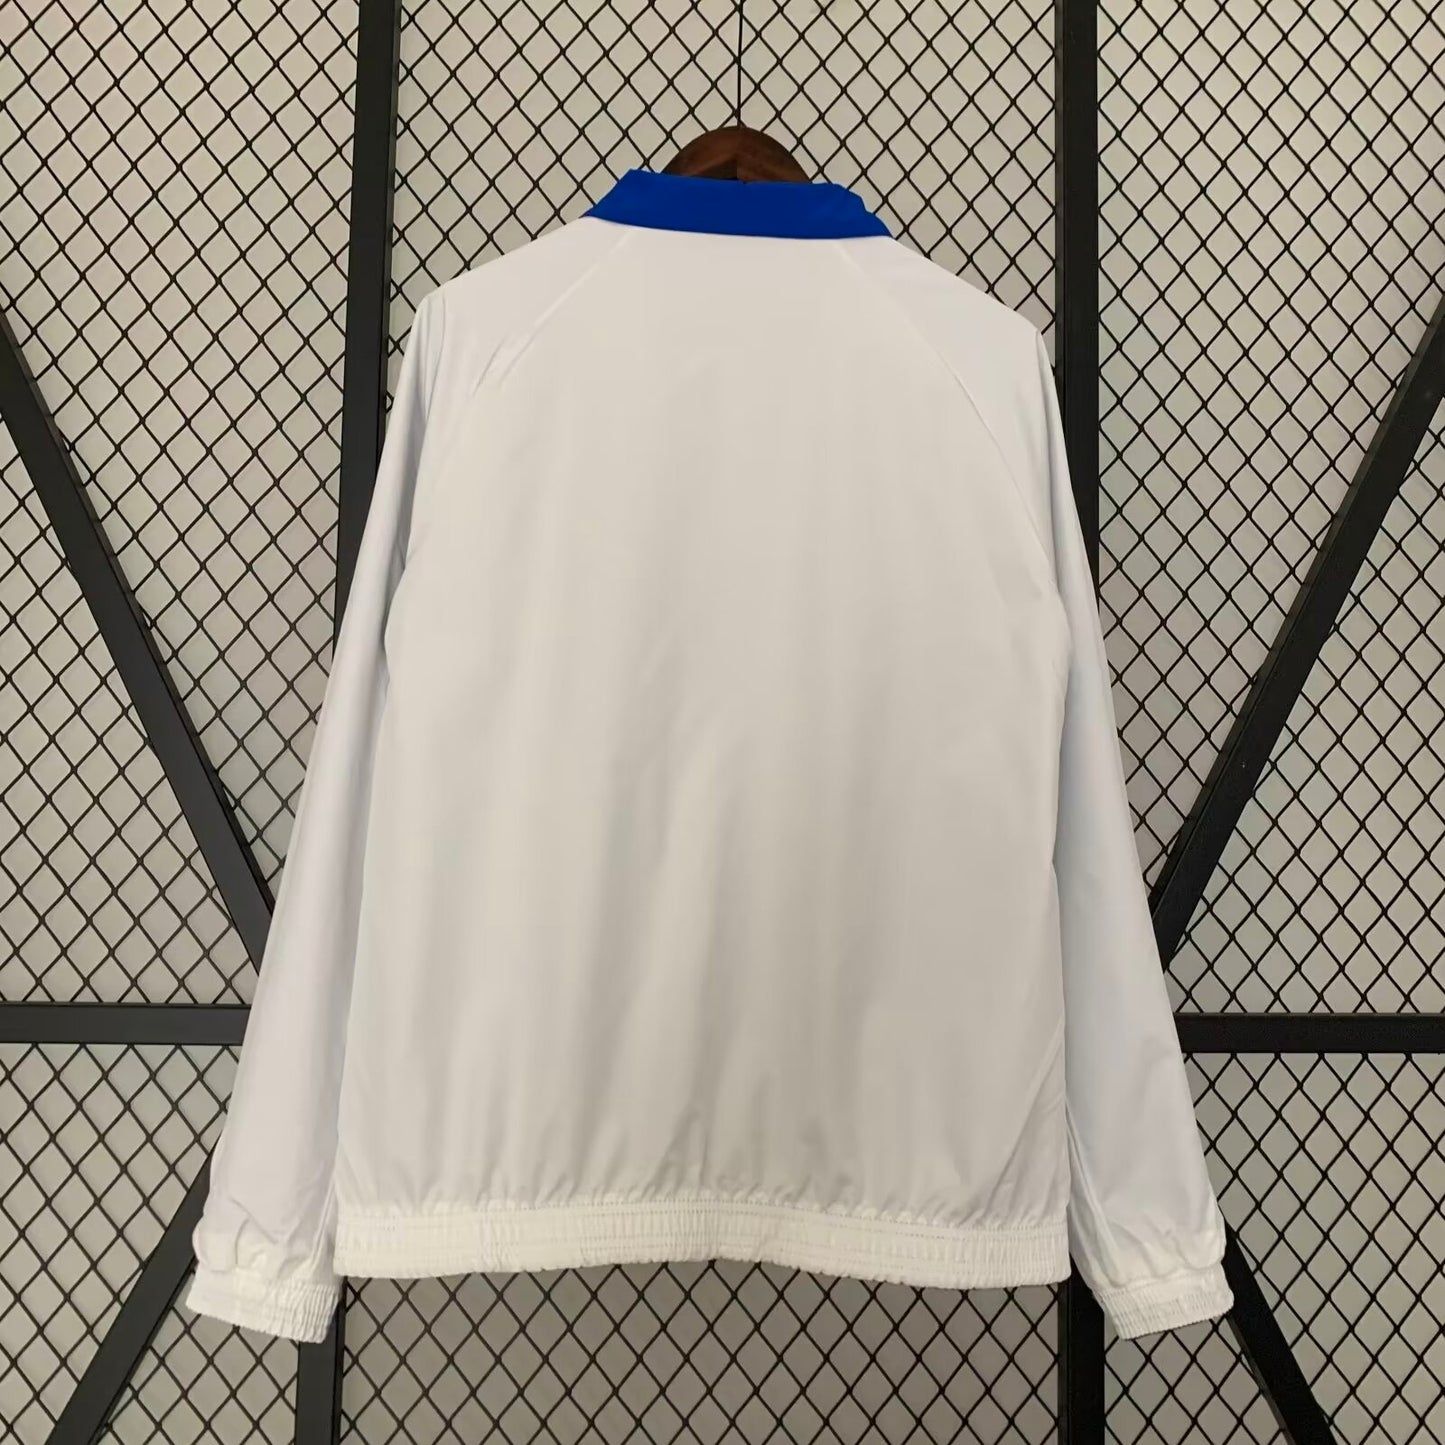 Italy National Team Soccer Adidas Revers-able Windbreaker Jacket - Azzuri & White